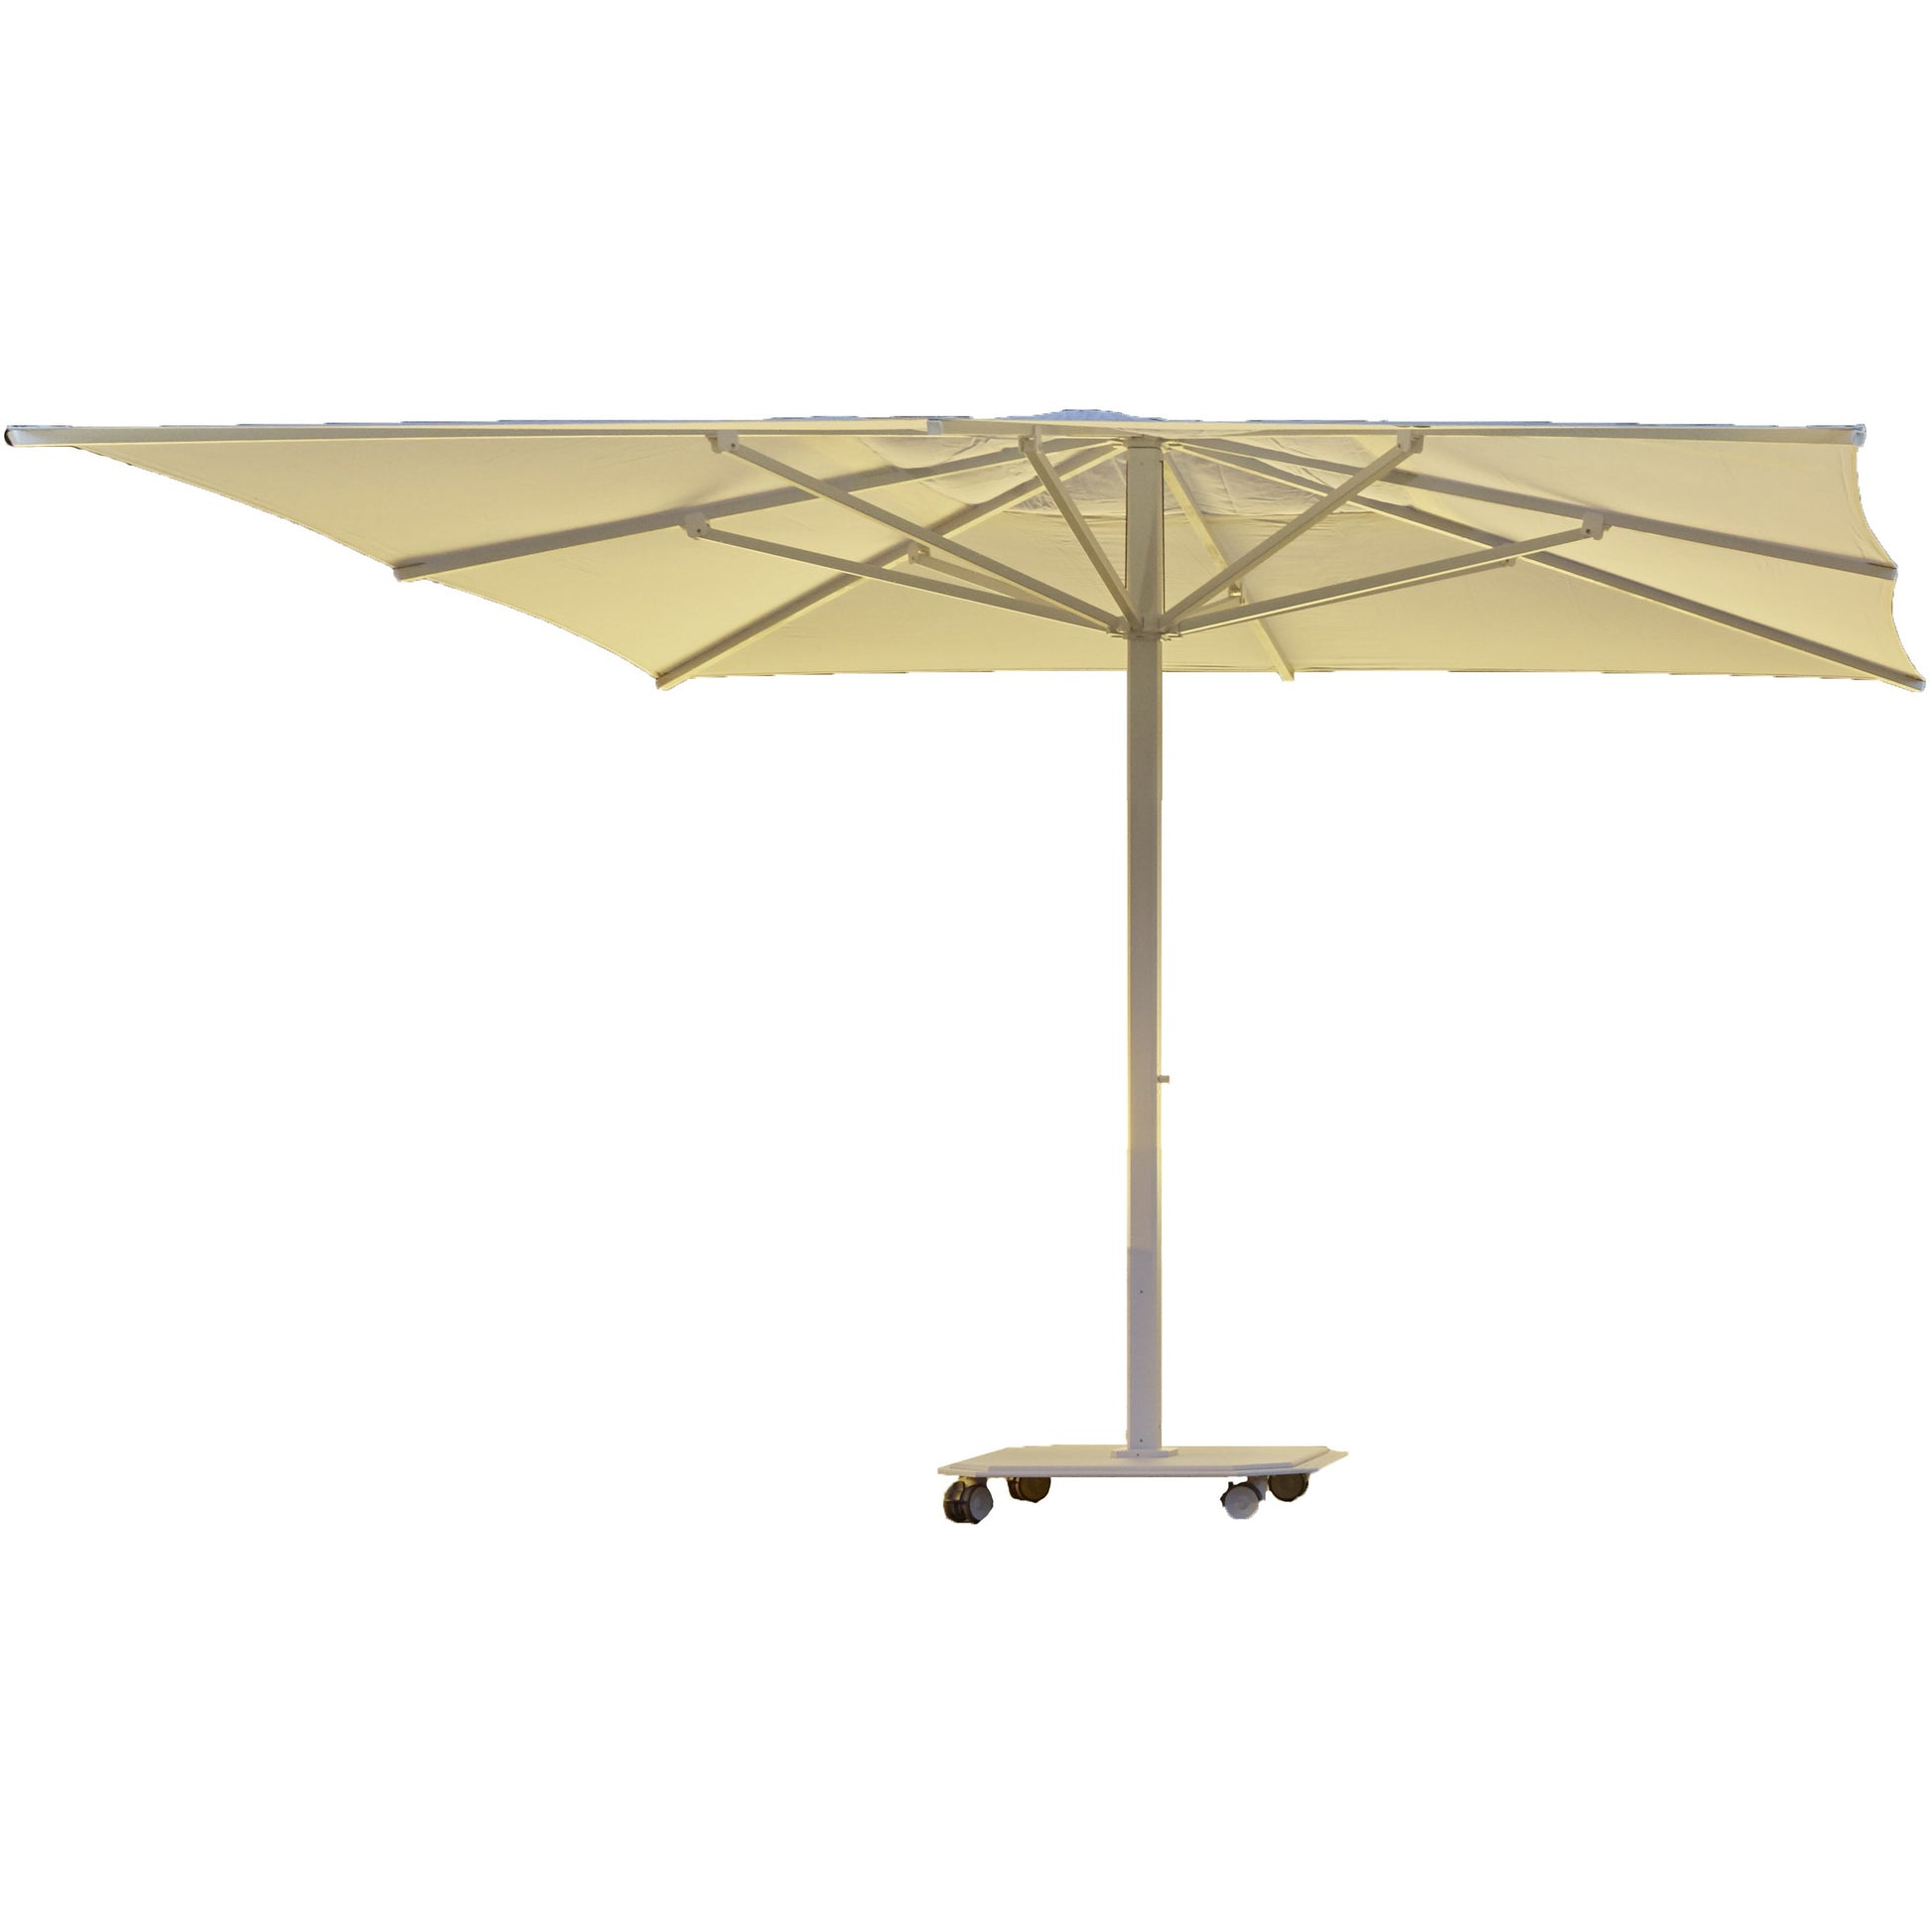 Caractere Cantilever Round Centre Pole Umbrella - PadioLiving - Caractere Cantilever Round Centre Pole Umbrella - Outdoor Umbrella - PadioLiving